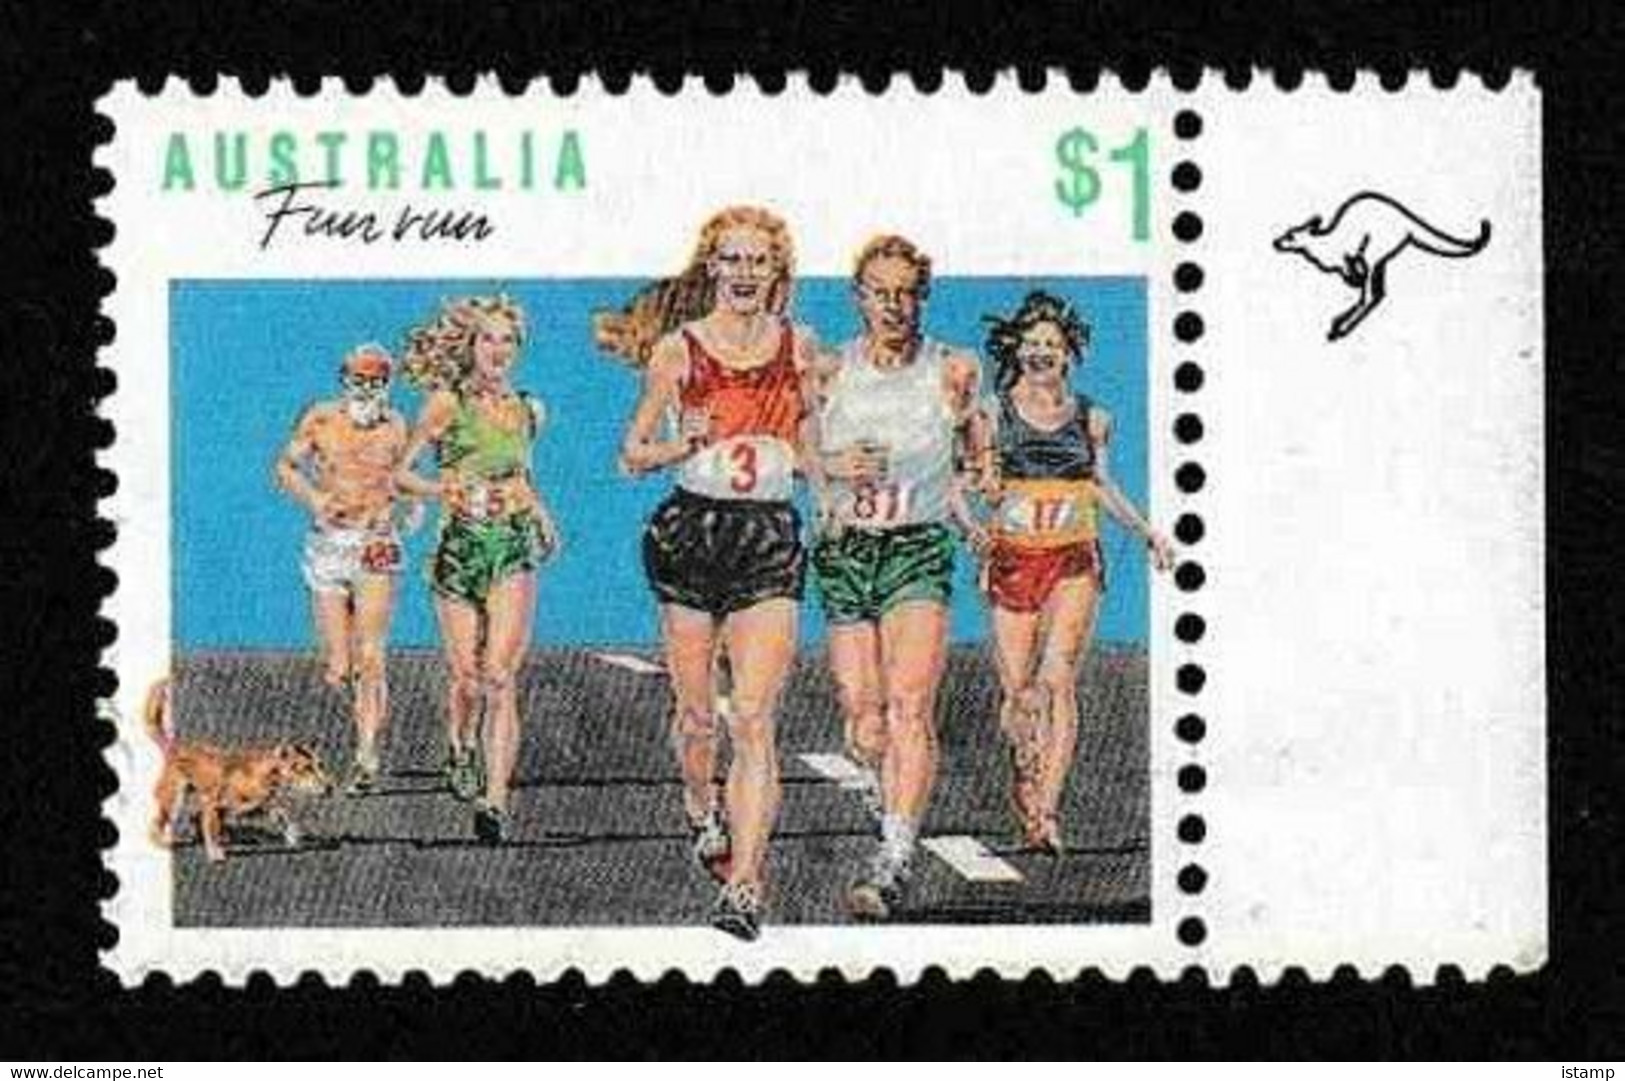 ⭕1990 - Australia SPORTS Series FUN RUNS (5th Reprint - Kangaroo) - $1 Stamp MNH⭕ - Essais & Réimpressions